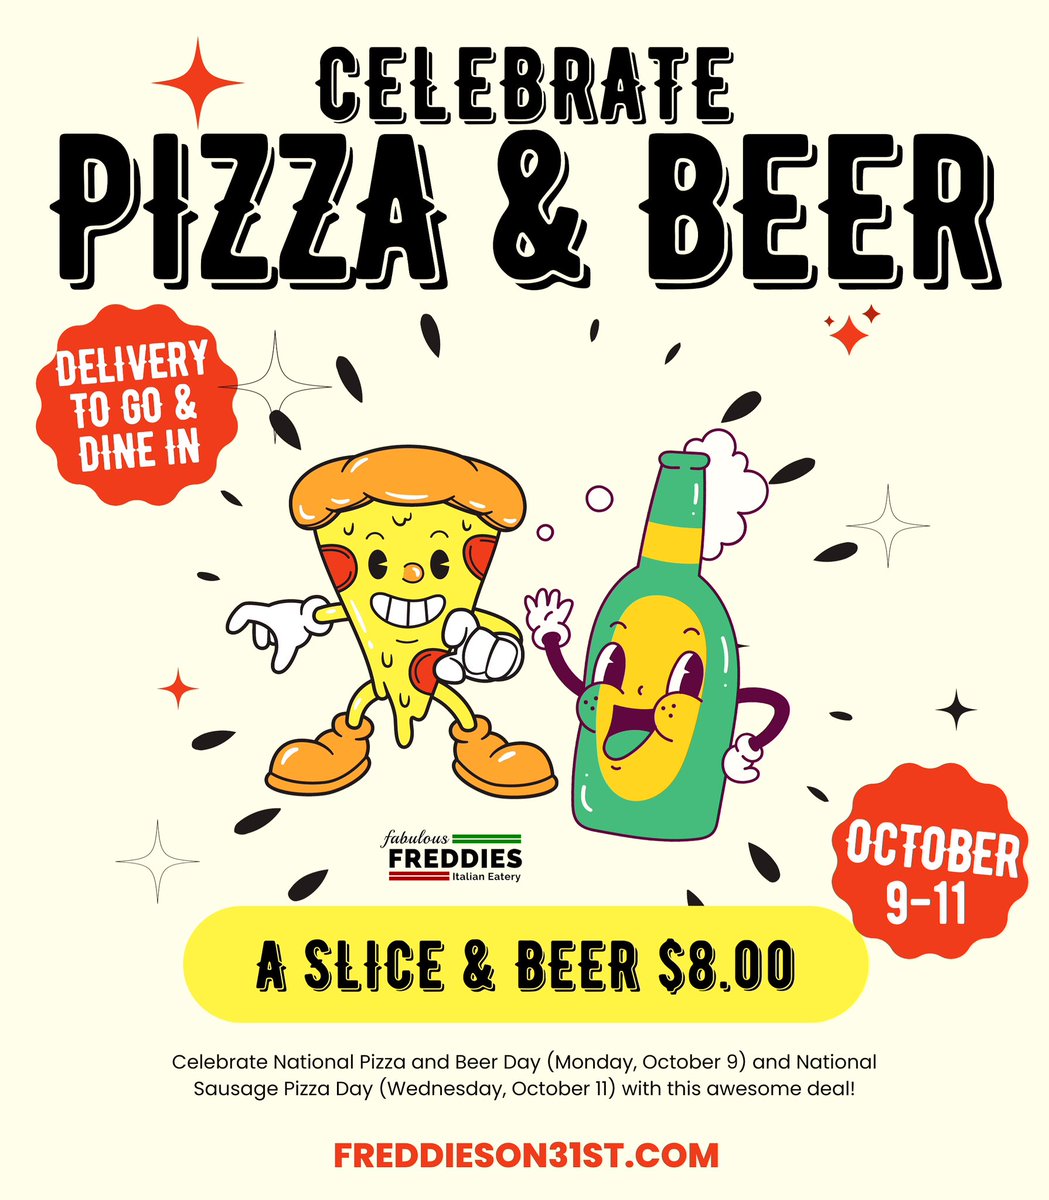 celebrate #PizzaAndBeer Monday-Wednesday next week for #NationalPizzaandBeerDay and #NationalSausagePizzaDay 🍕🍕🍺 #chicagopizza #chicagostylegrub #pizzaofbridgeport #freddieson31st